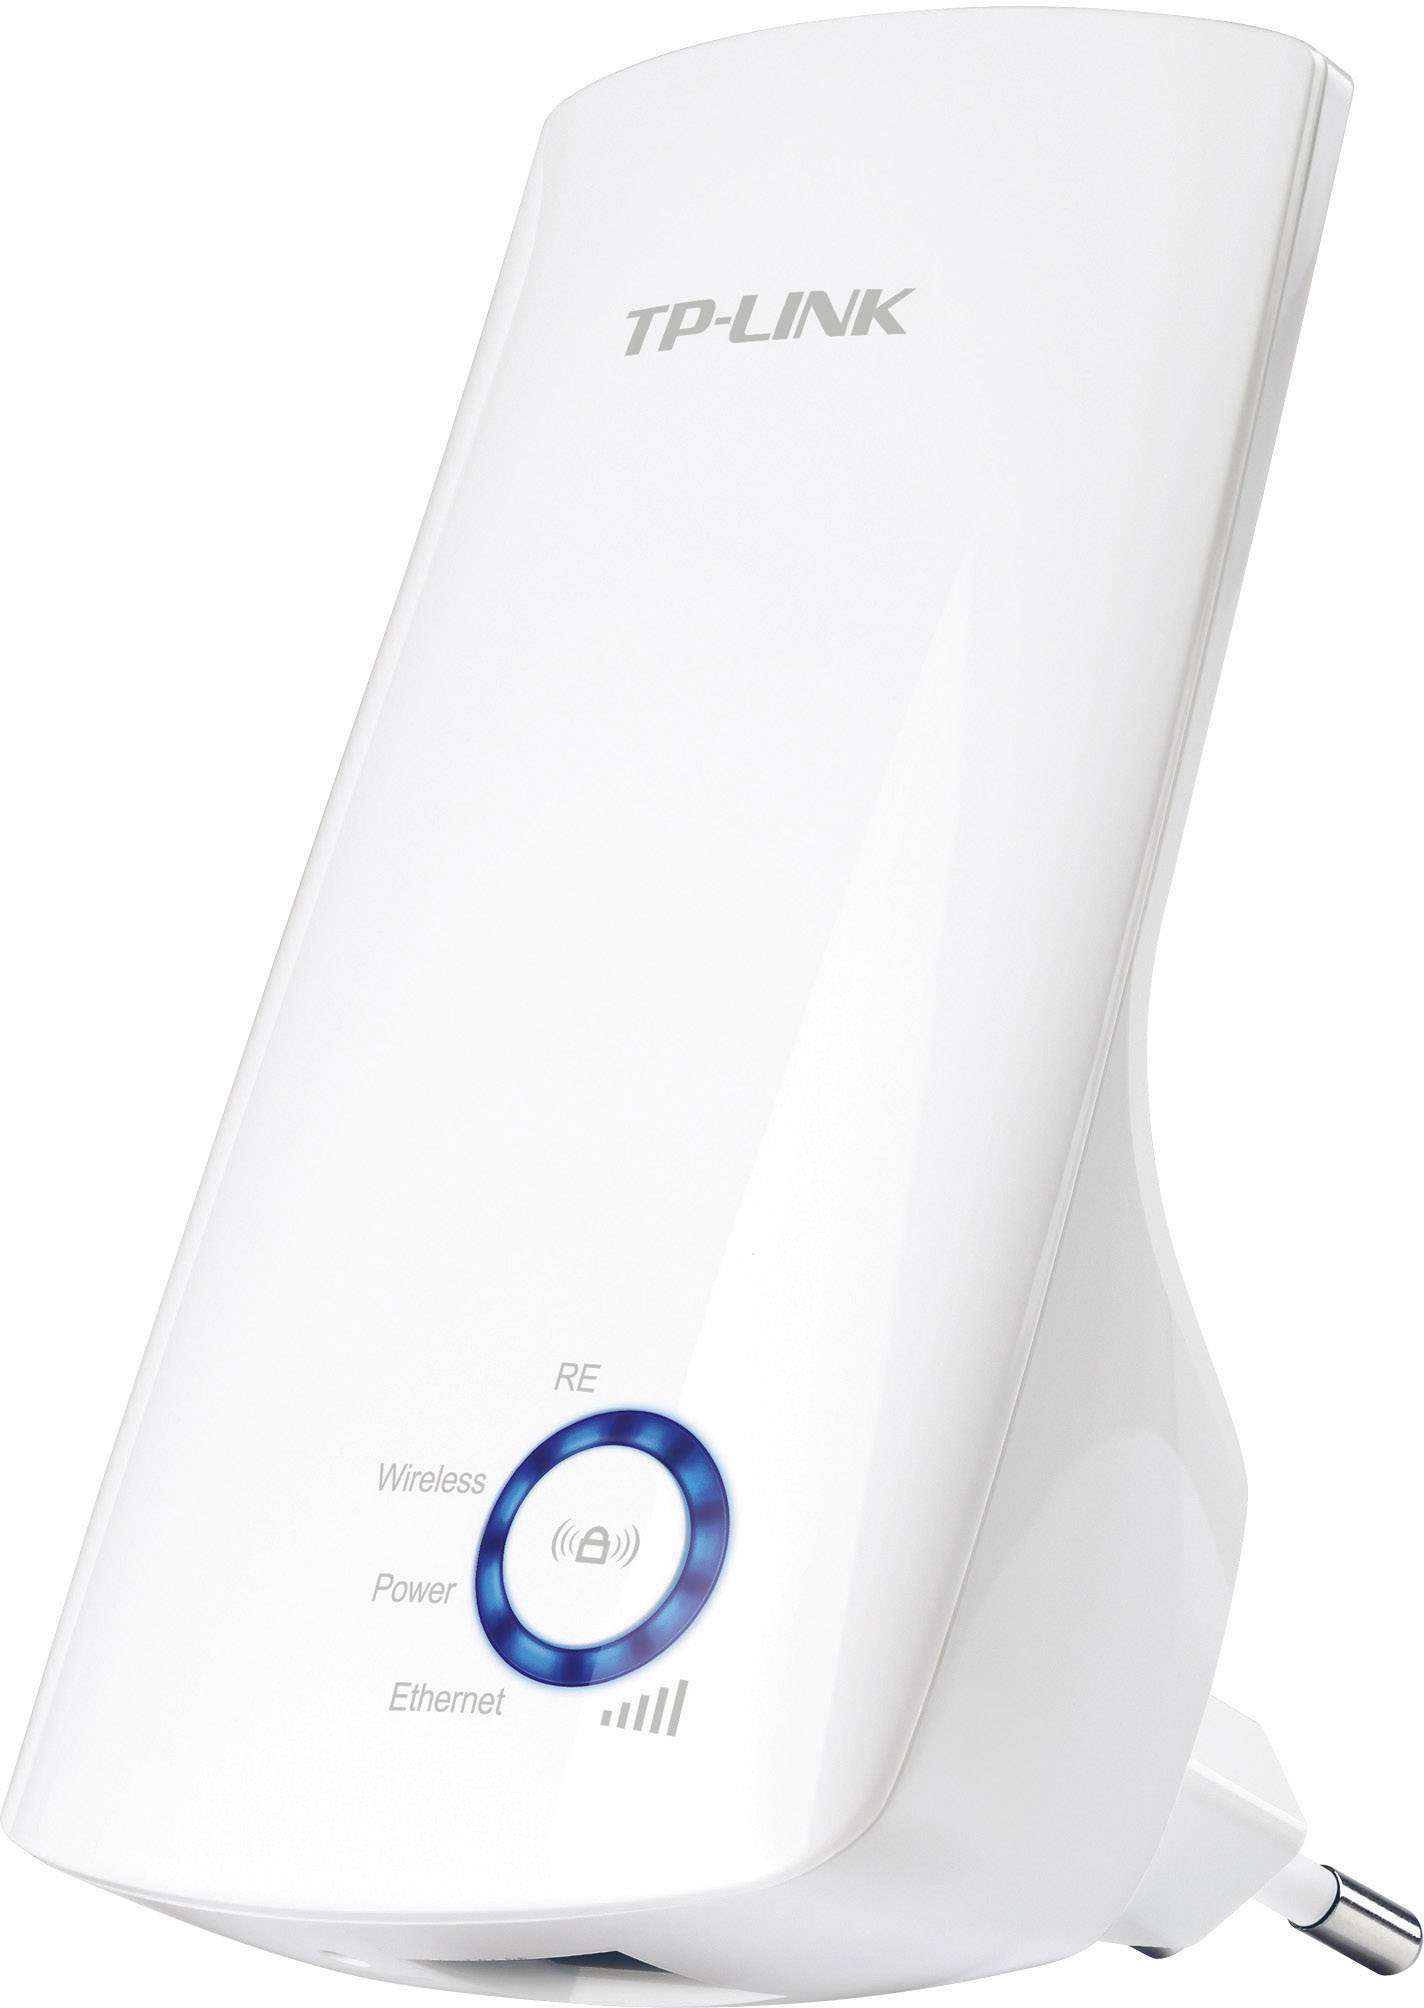 Scepticisme geloof Leonardoda TP-LINK TL-WA850RE WiFi versterker 300 MBit/s 2.4 GHz | Conrad.nl